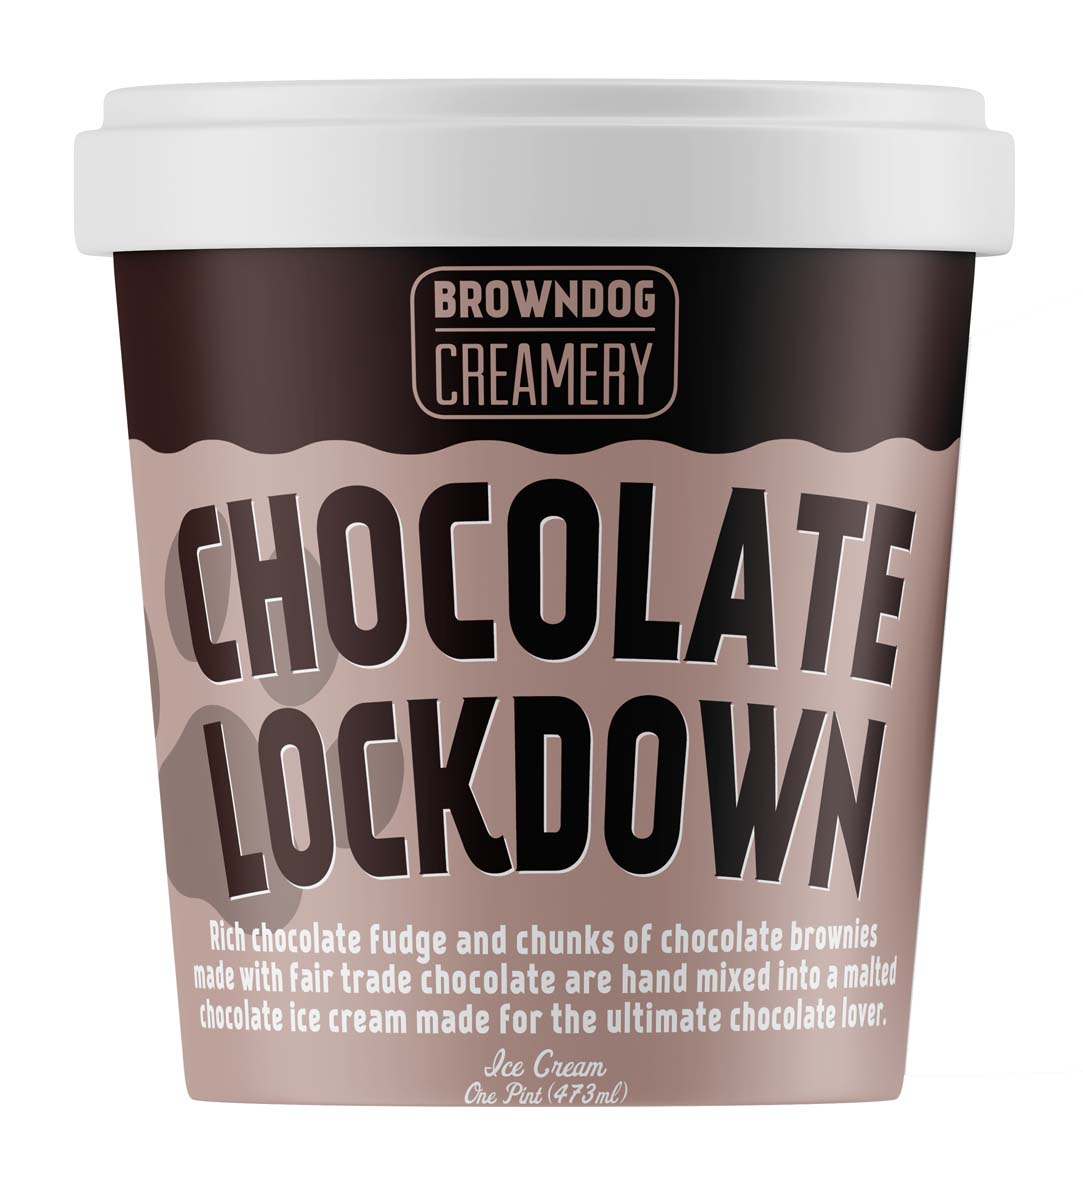 CHOCOLATE LOCKDOWN ICE CREAM